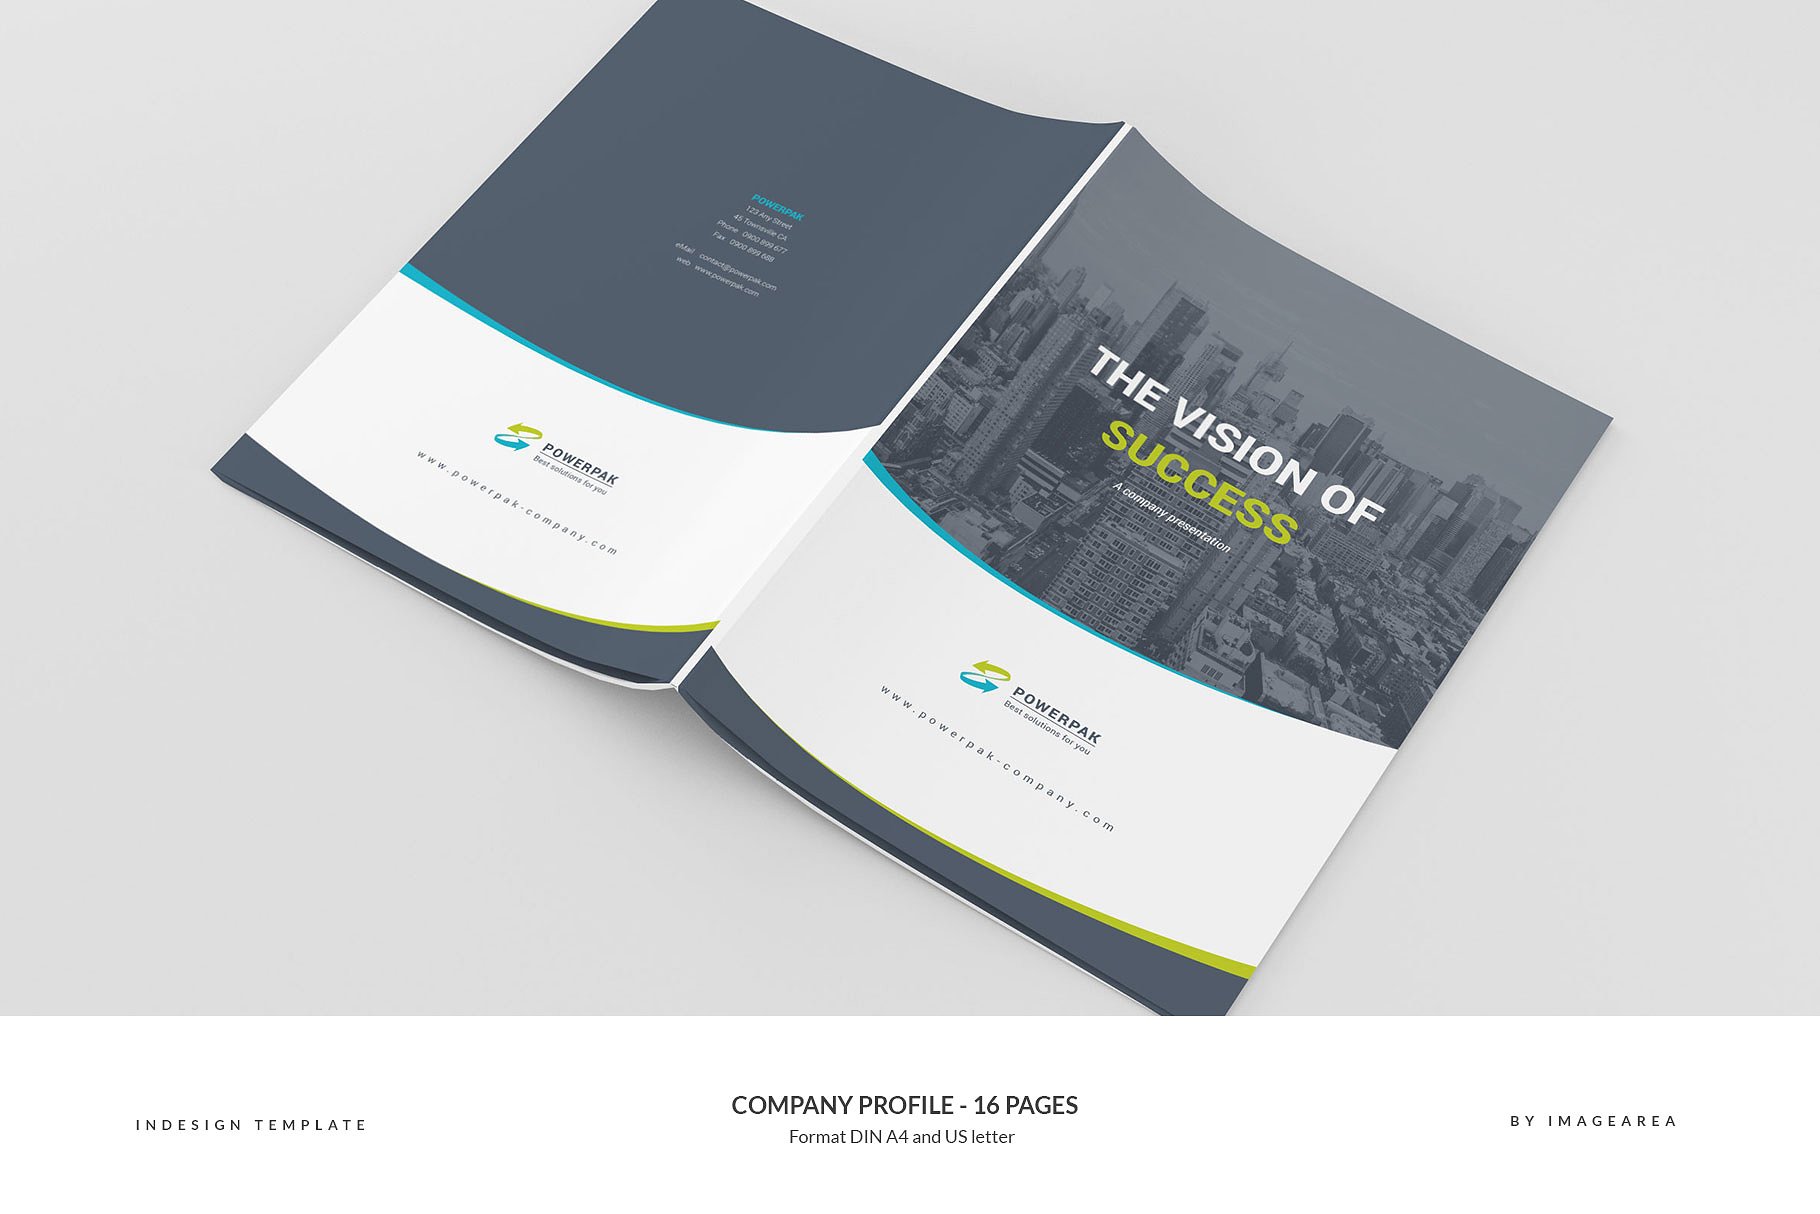 企业宣传画册设计模板 Company Profile – 16 Pages插图(1)